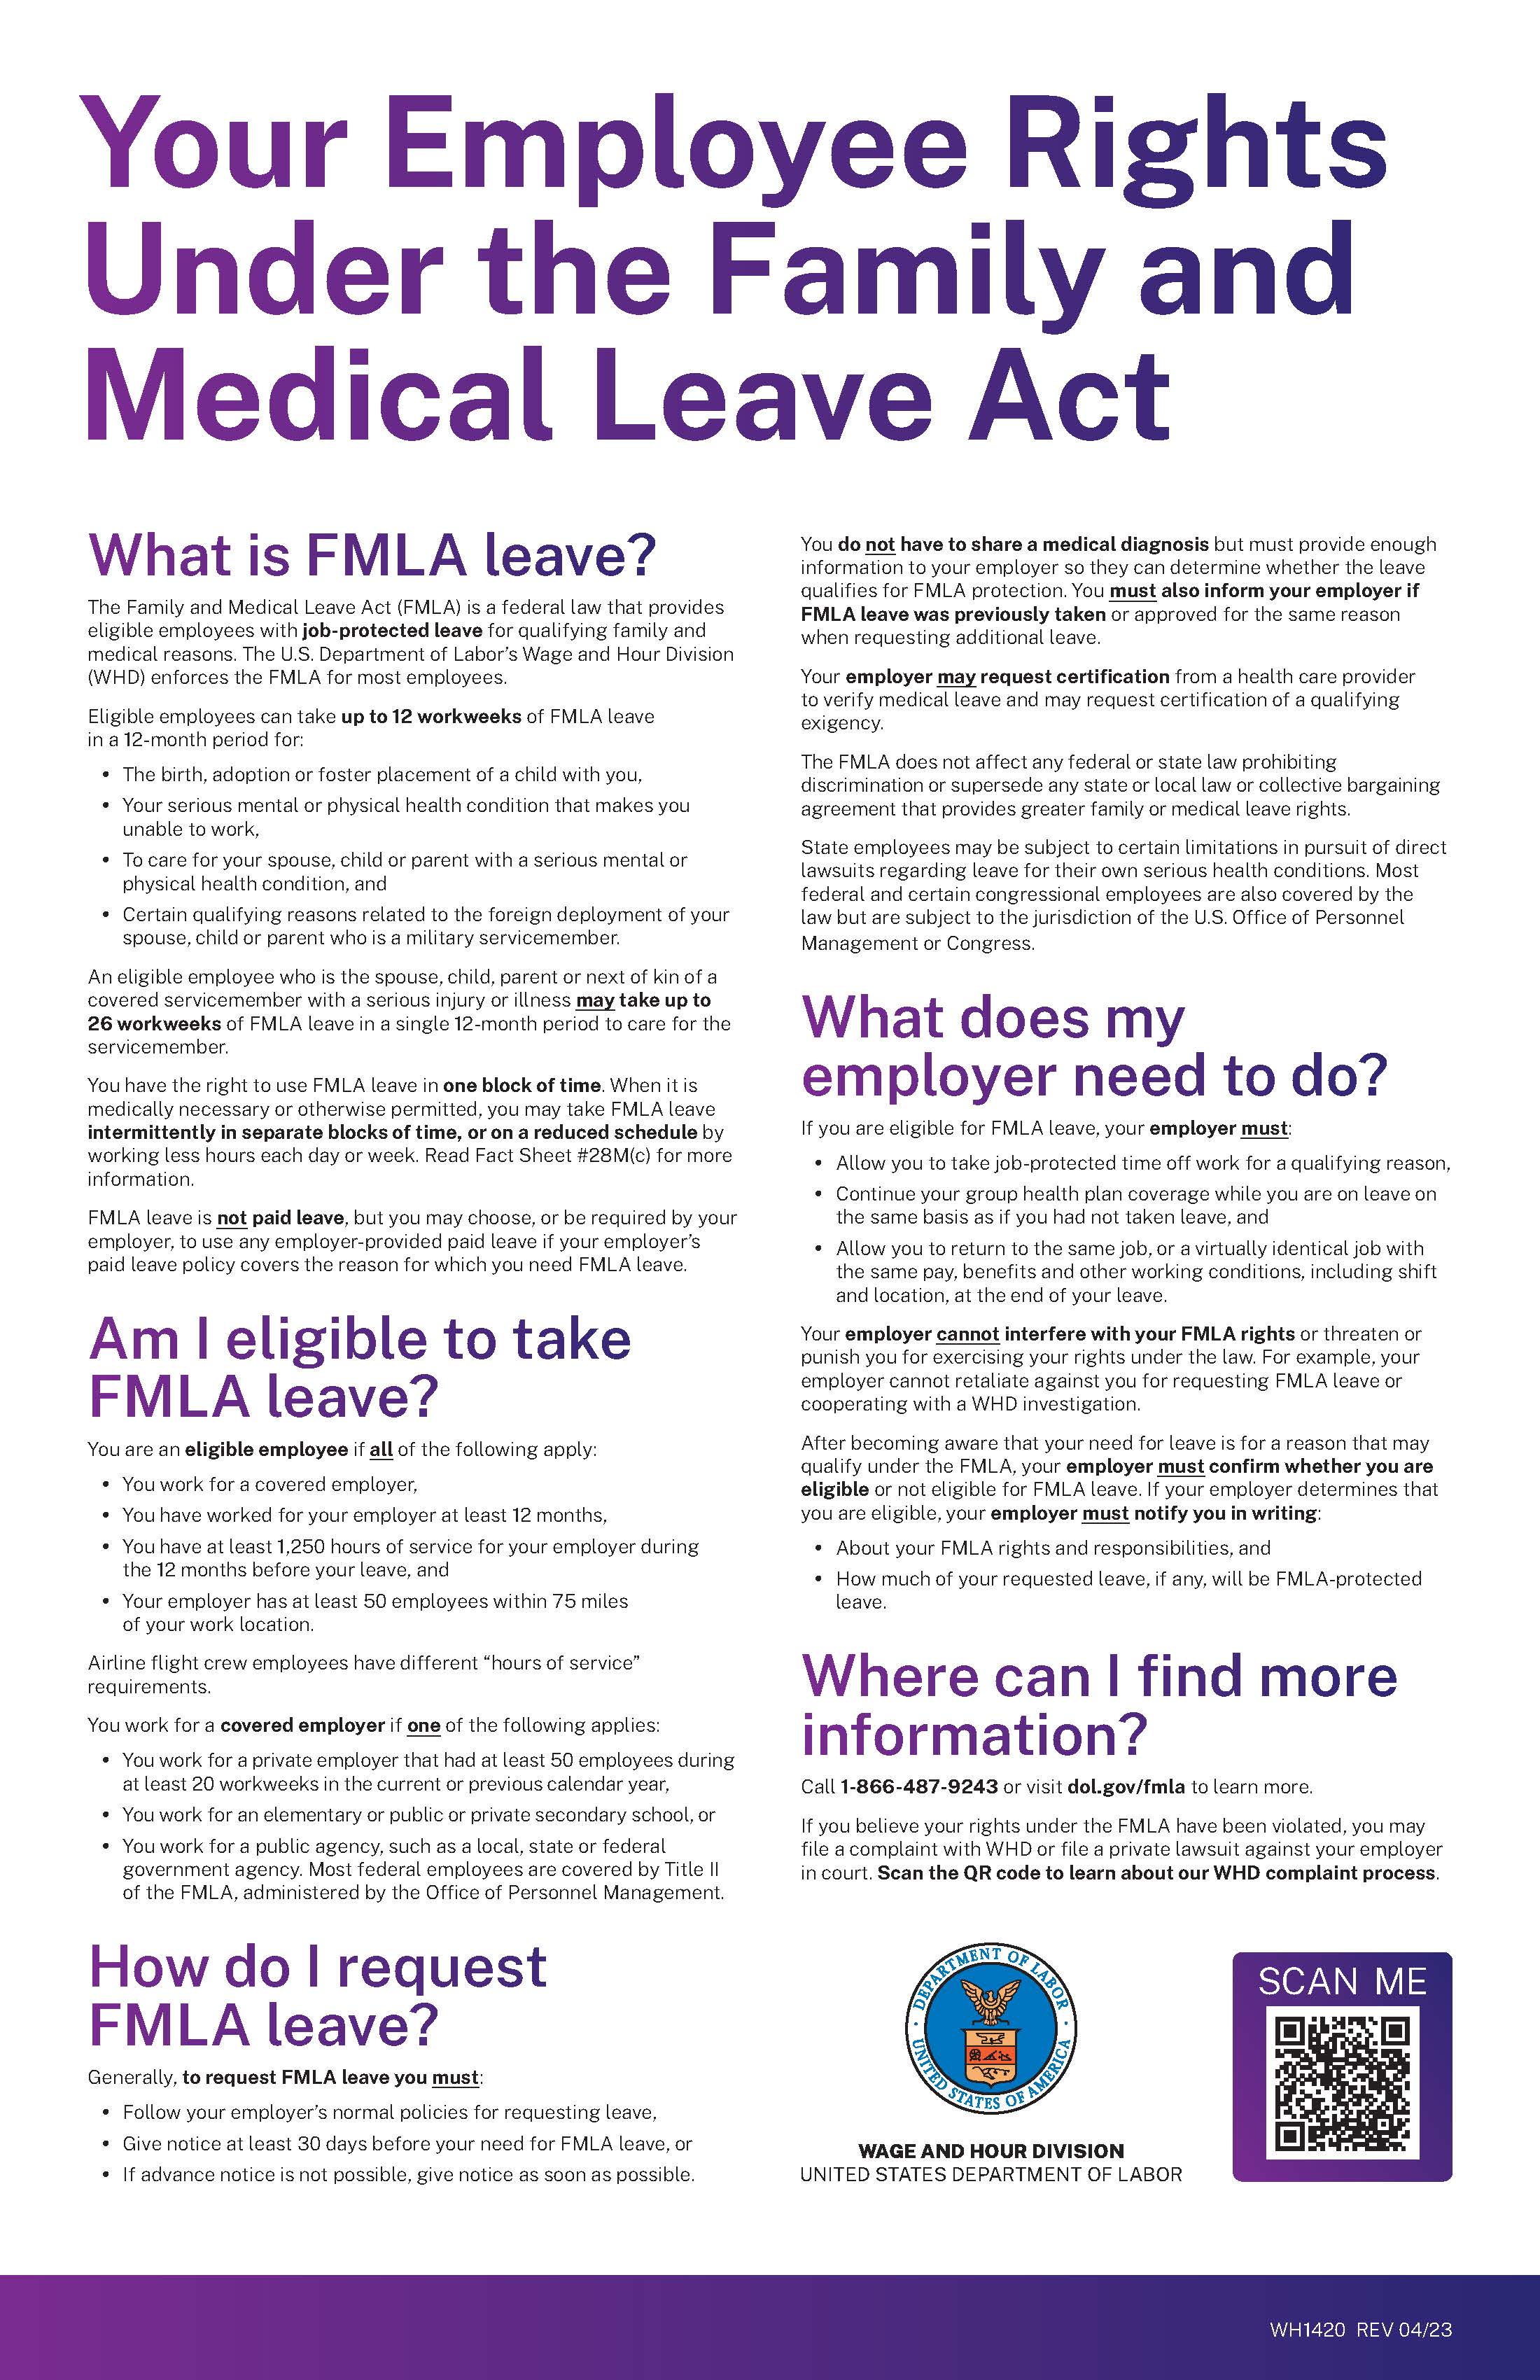 Federal FMLA poster